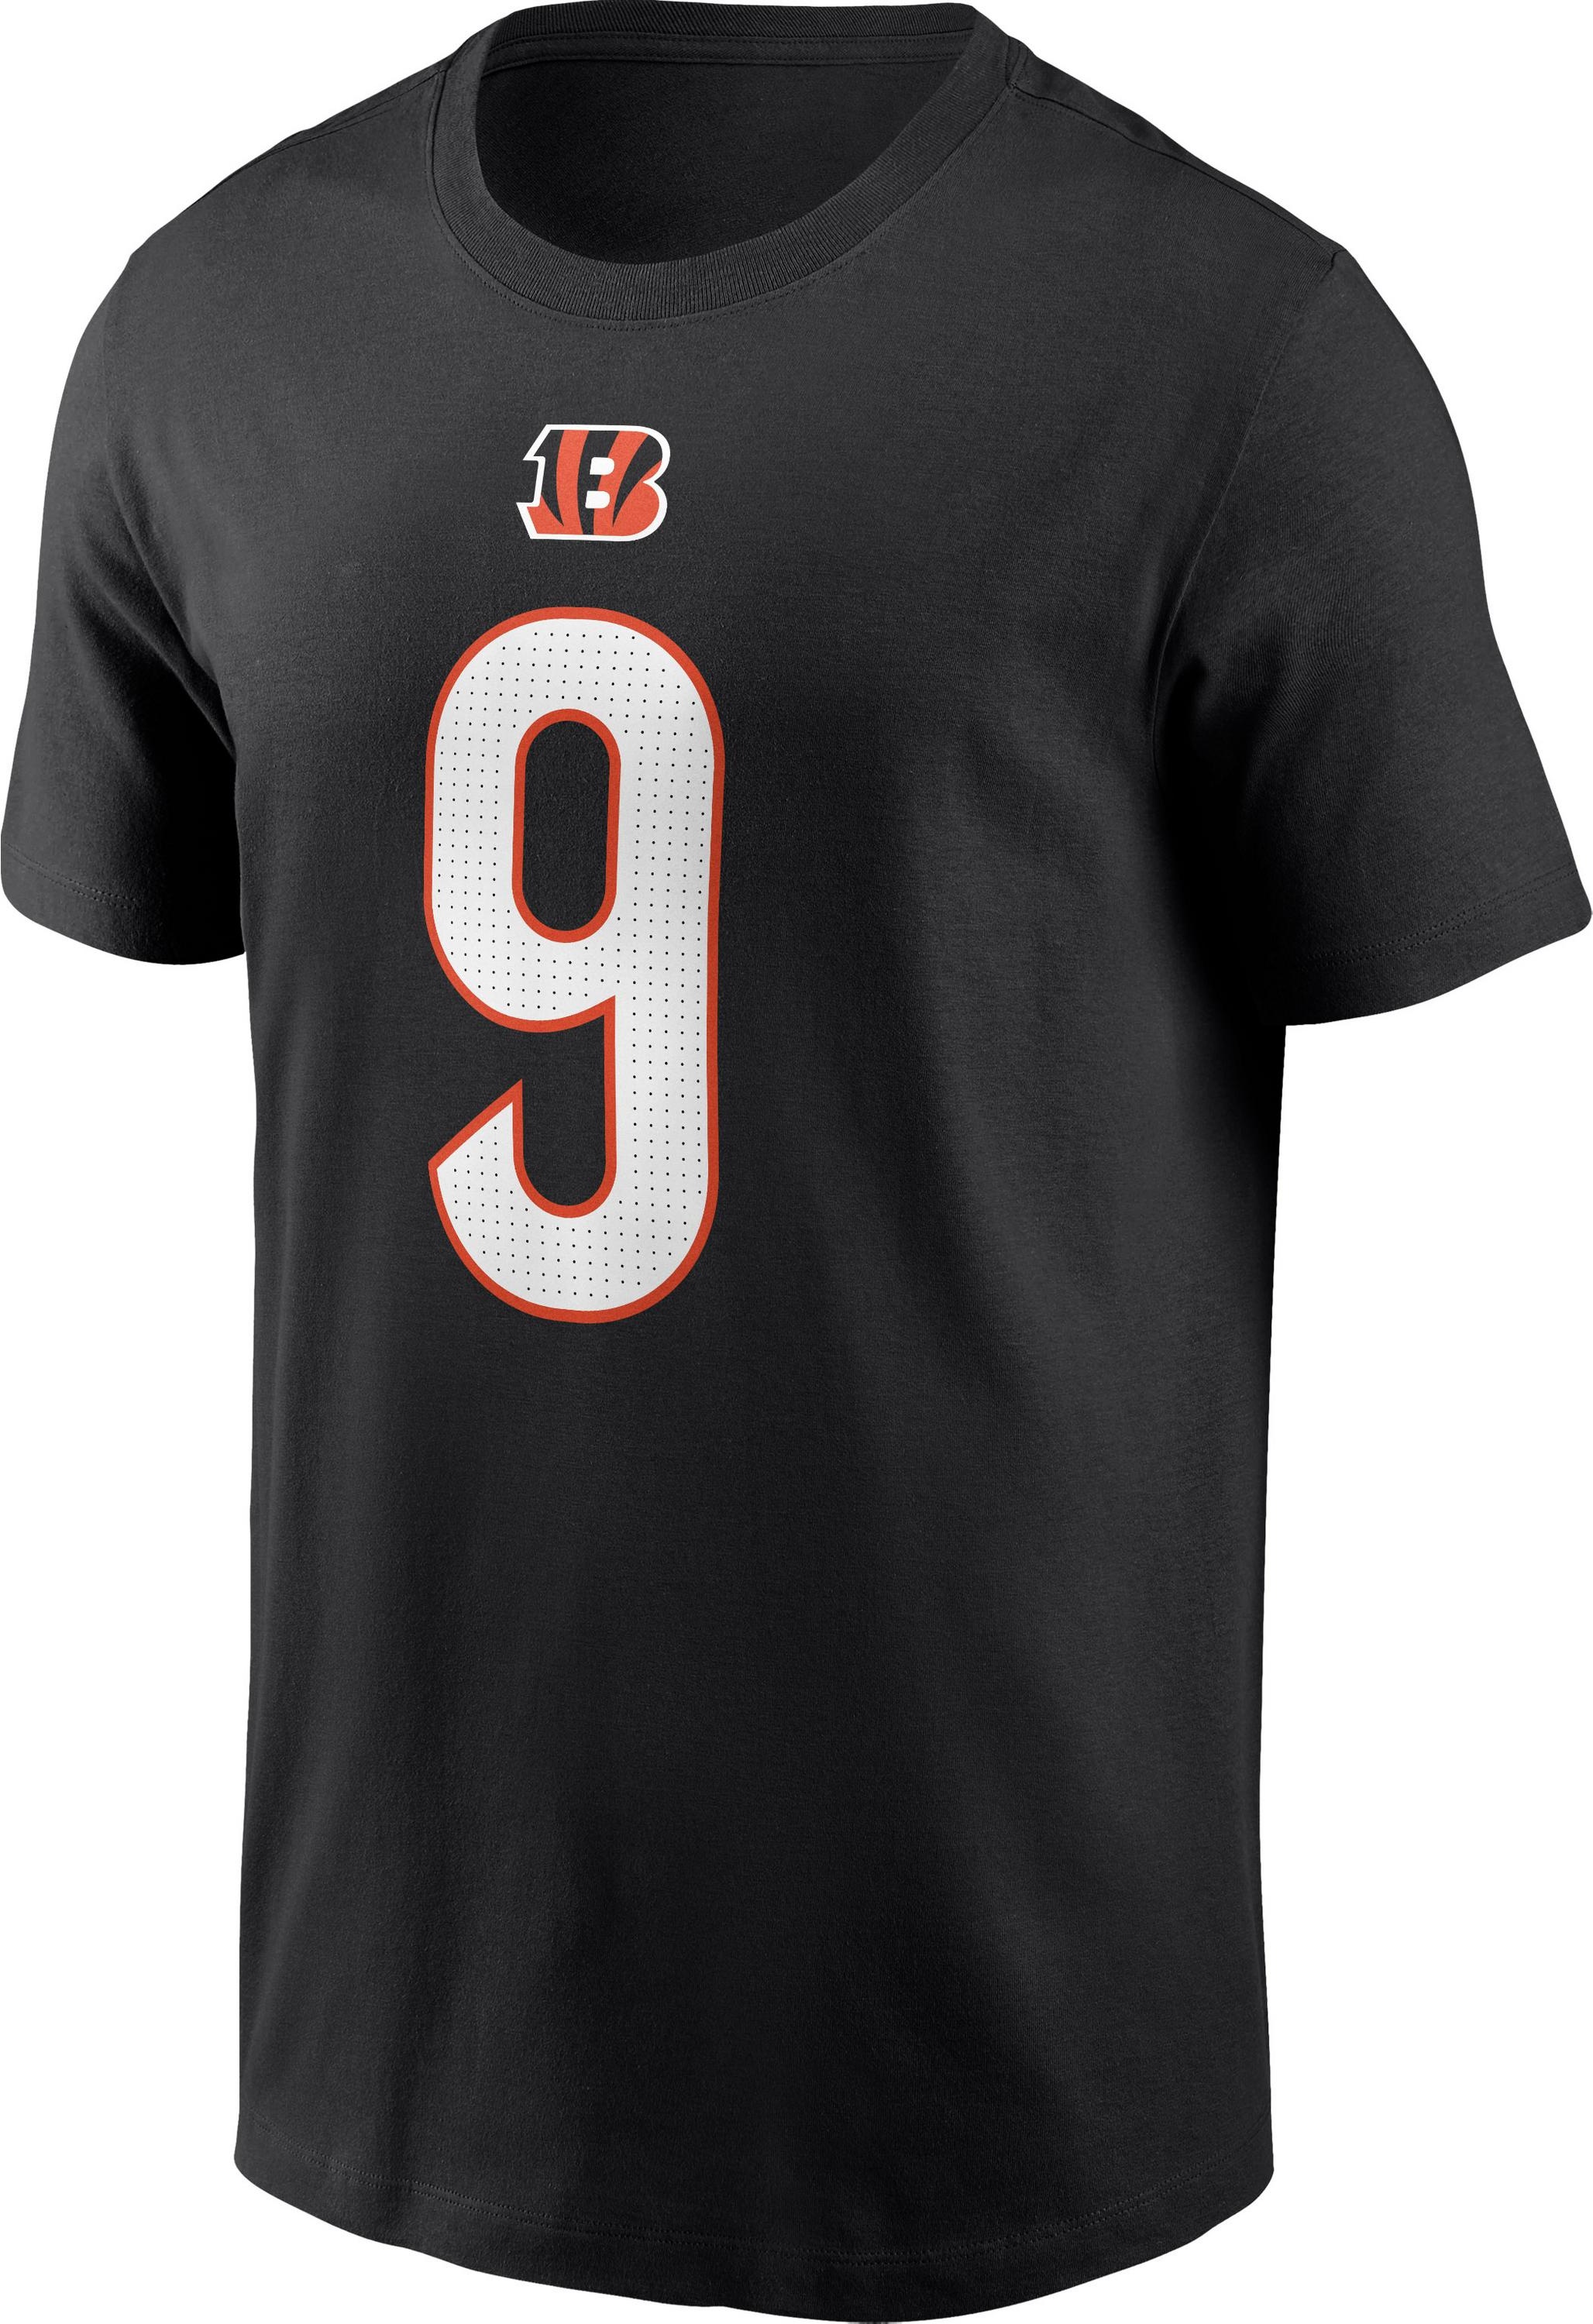 Nike Joe Burrow Cincinnati Bengals T-Shirt Herren in black, Größe M - schwarz